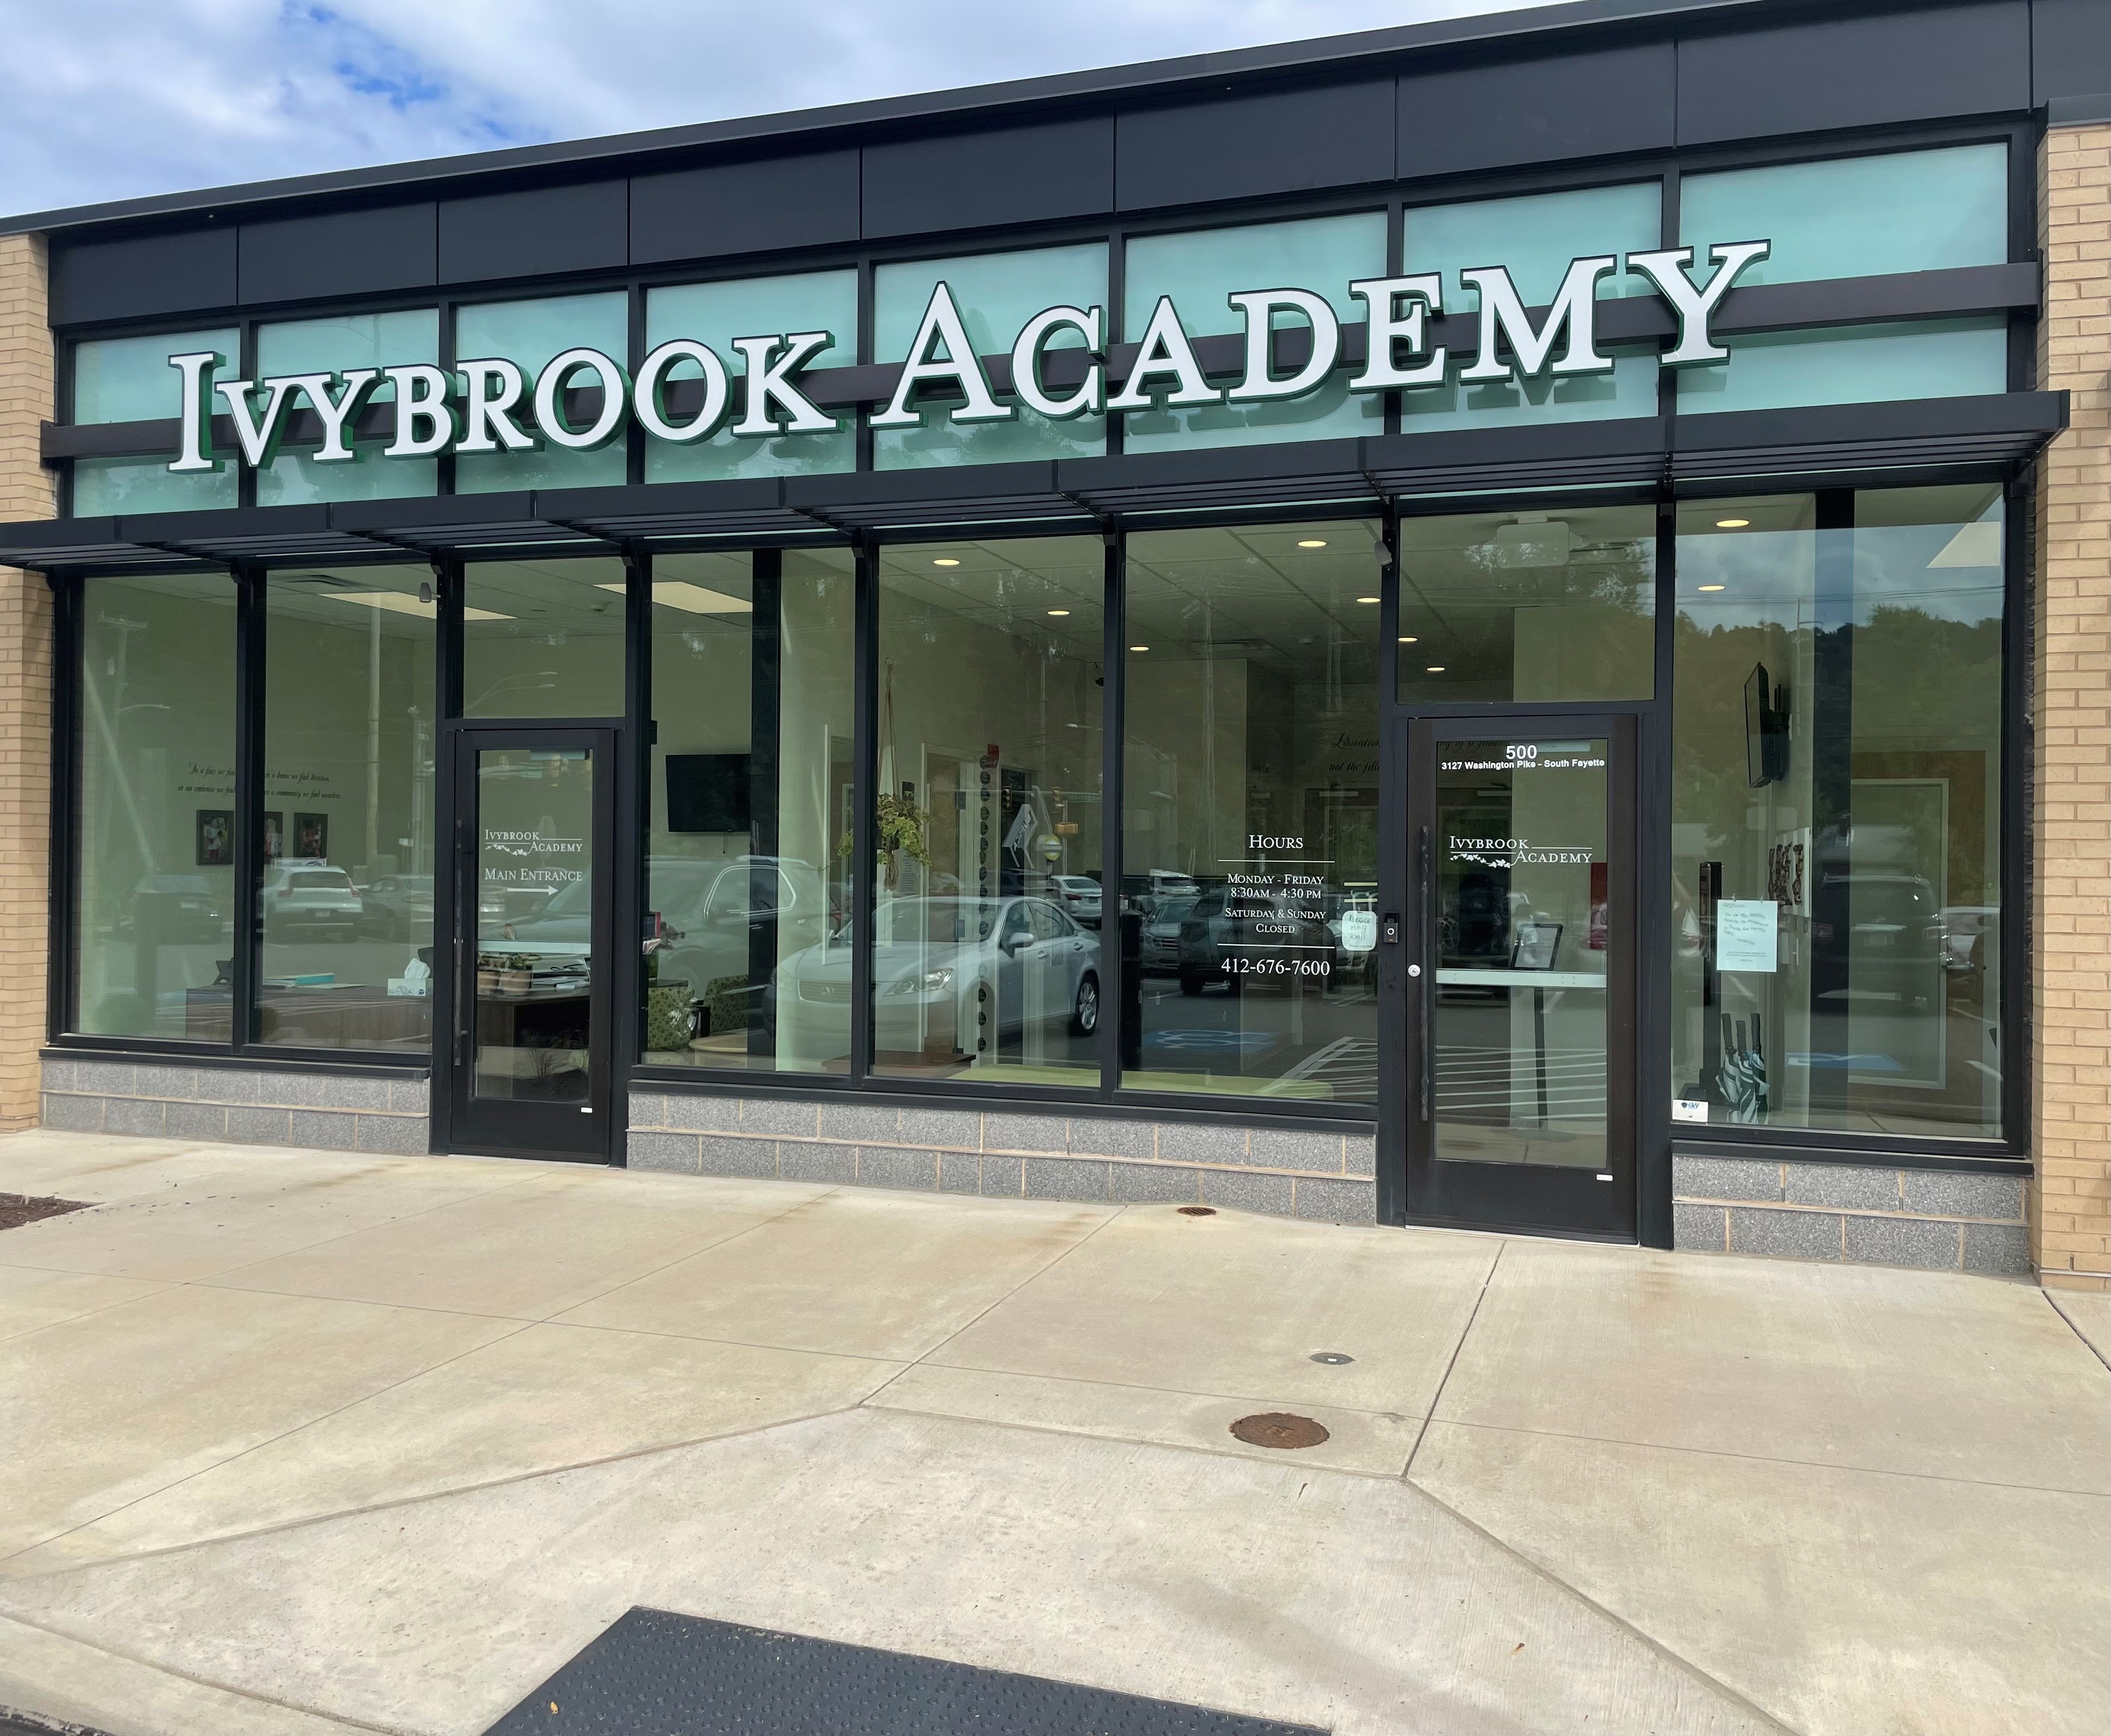 Ivybrook academy campus